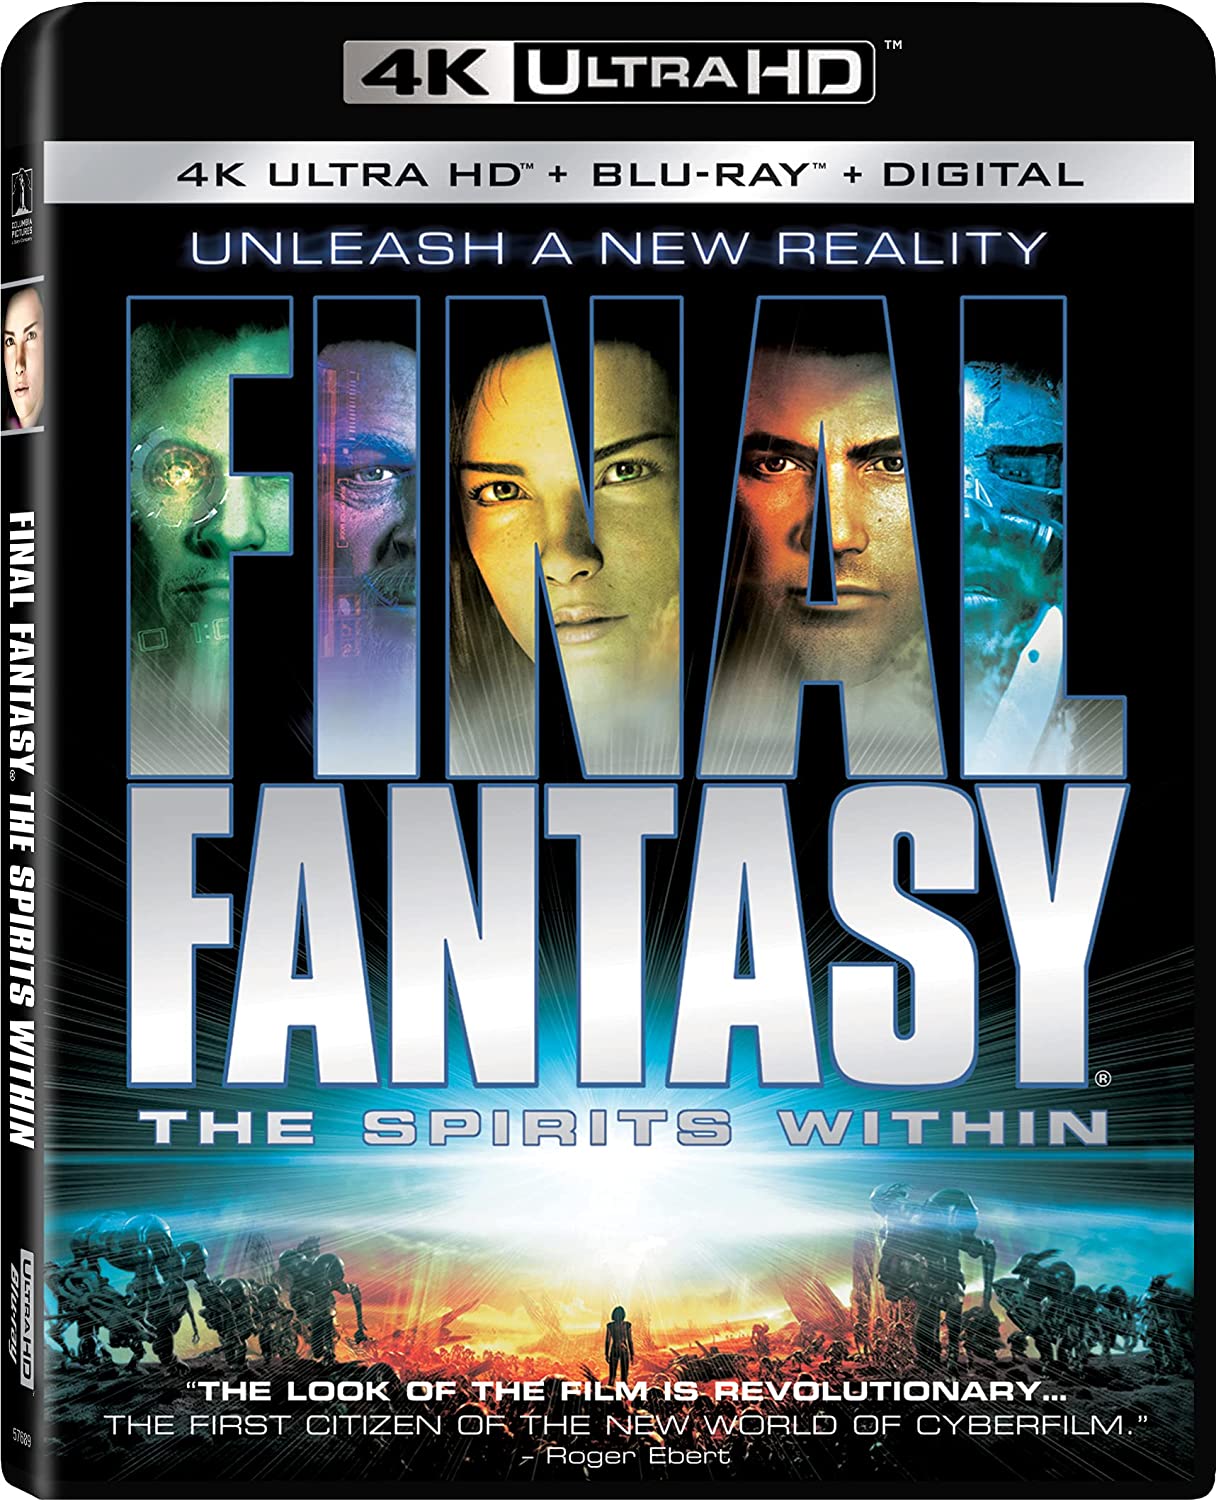 Final Fantasy- The Spirits Within 4k UHD Blu-ray